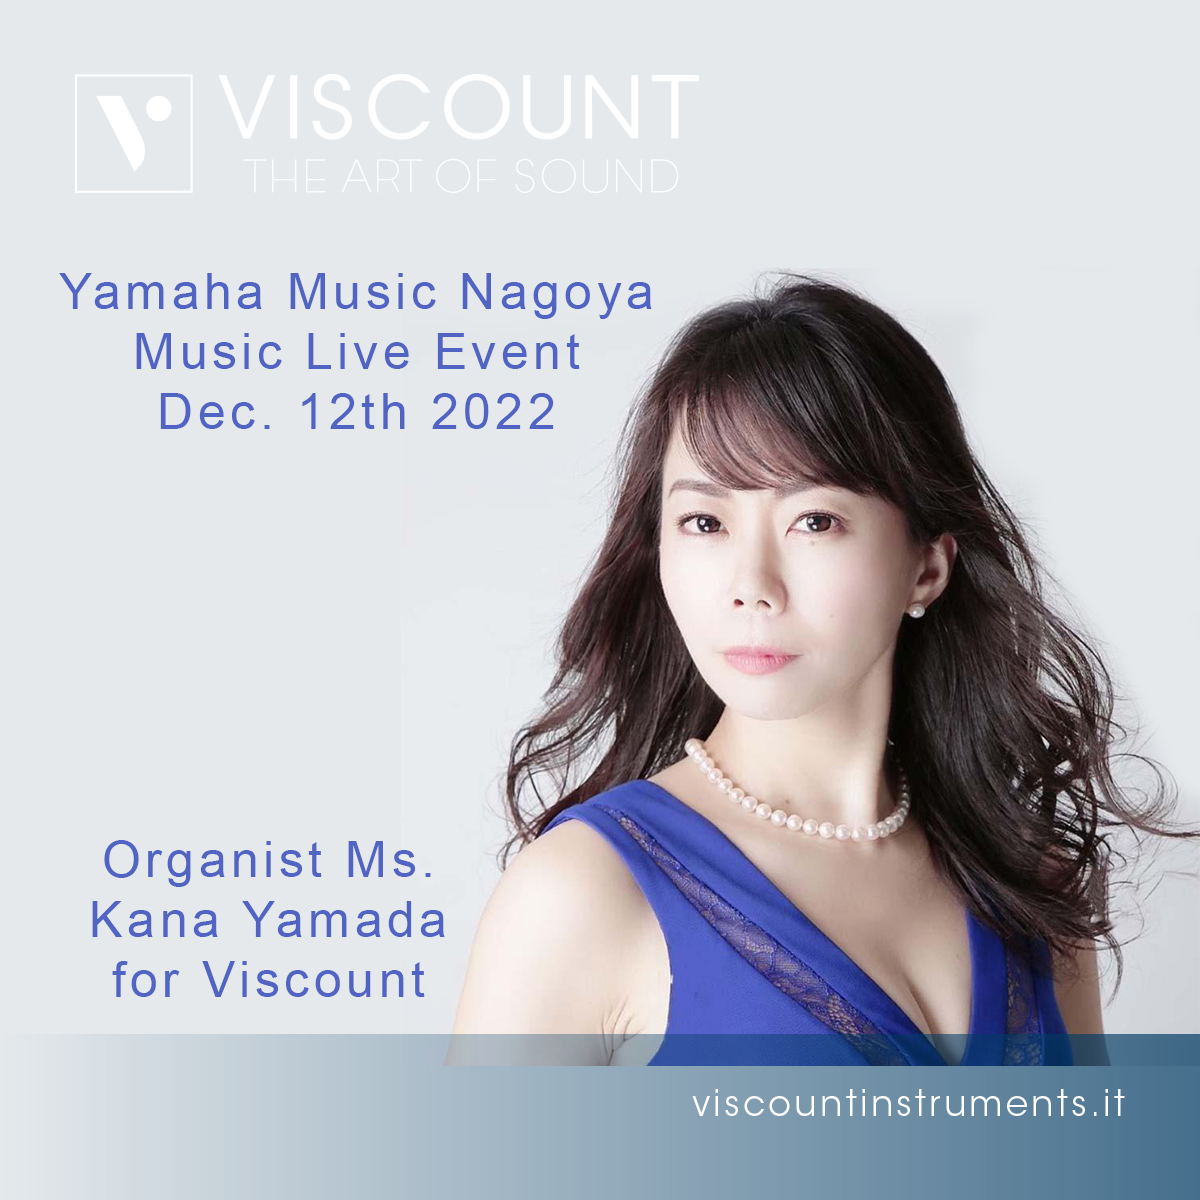 Yamaha Music Nagoya music live event with Viscount organs